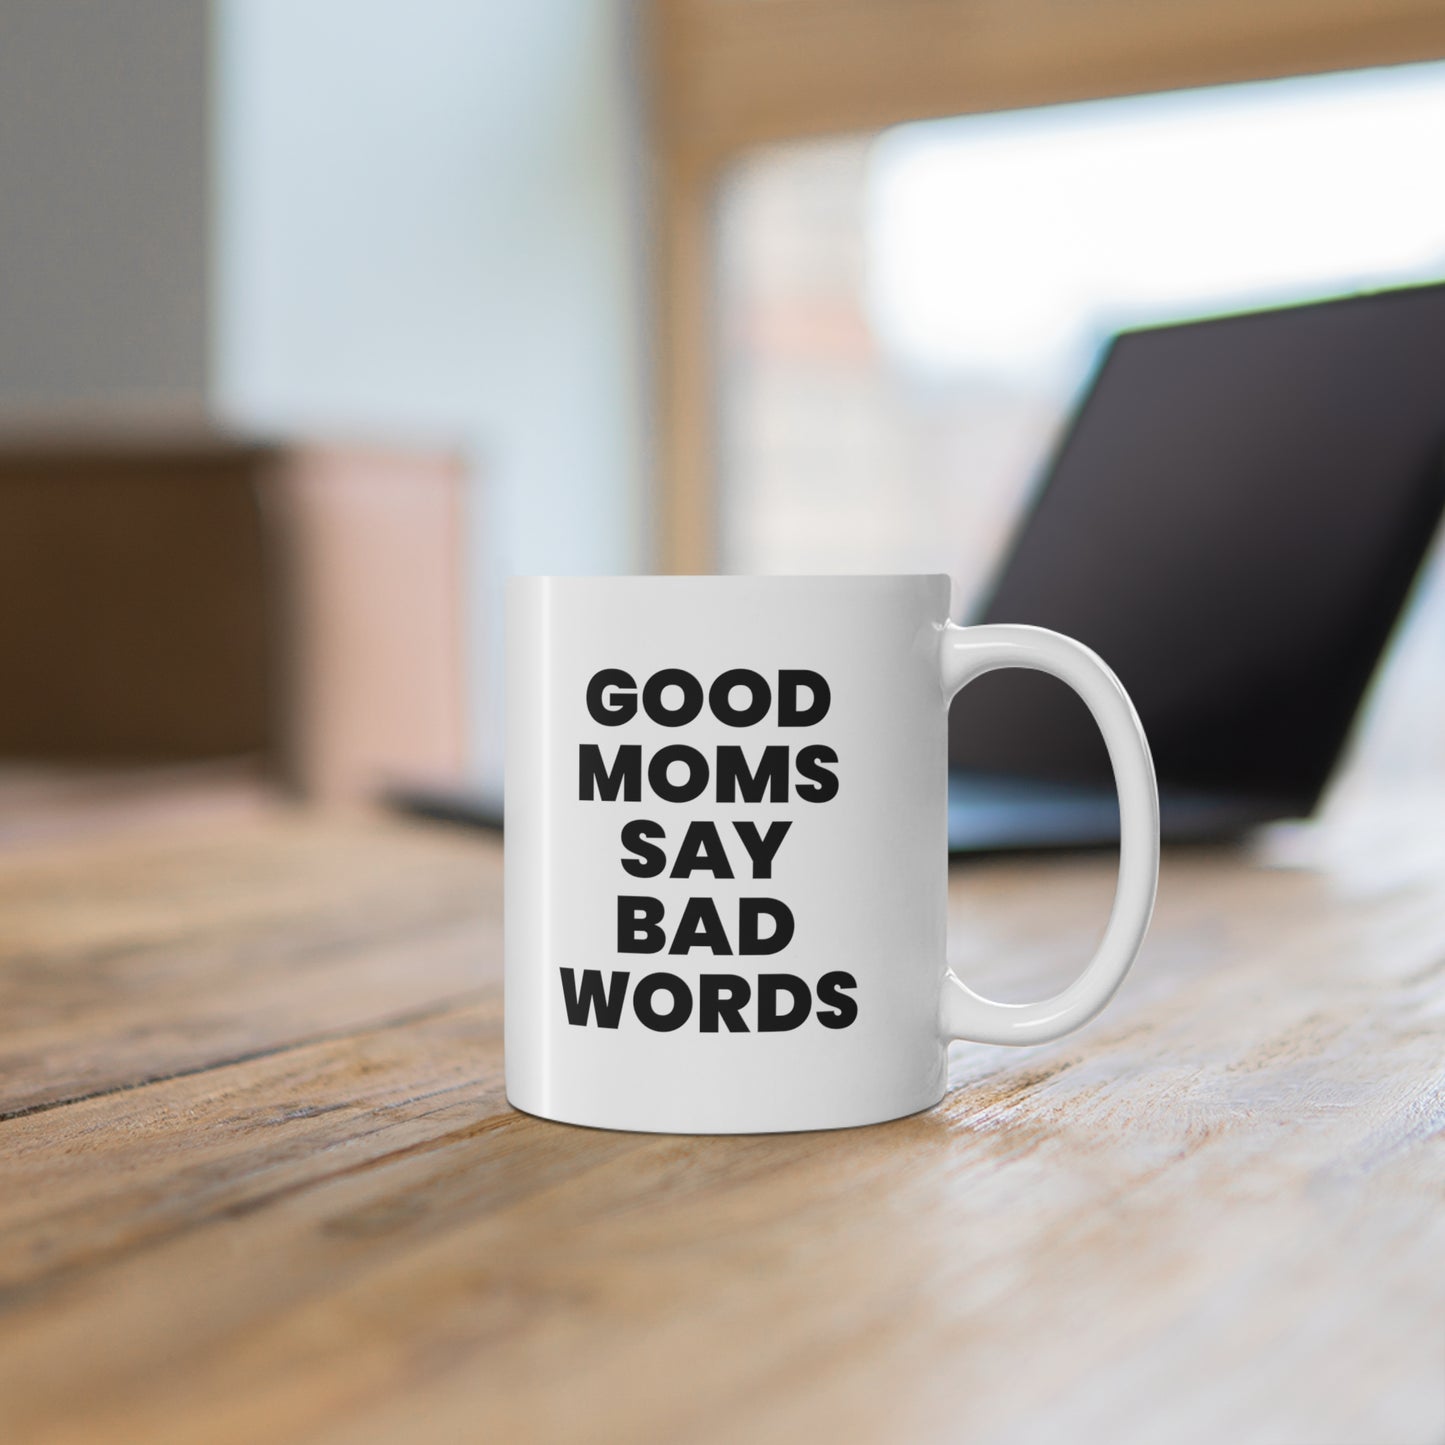 11oz ceramic mug with quote Good Moms Say Bad Words